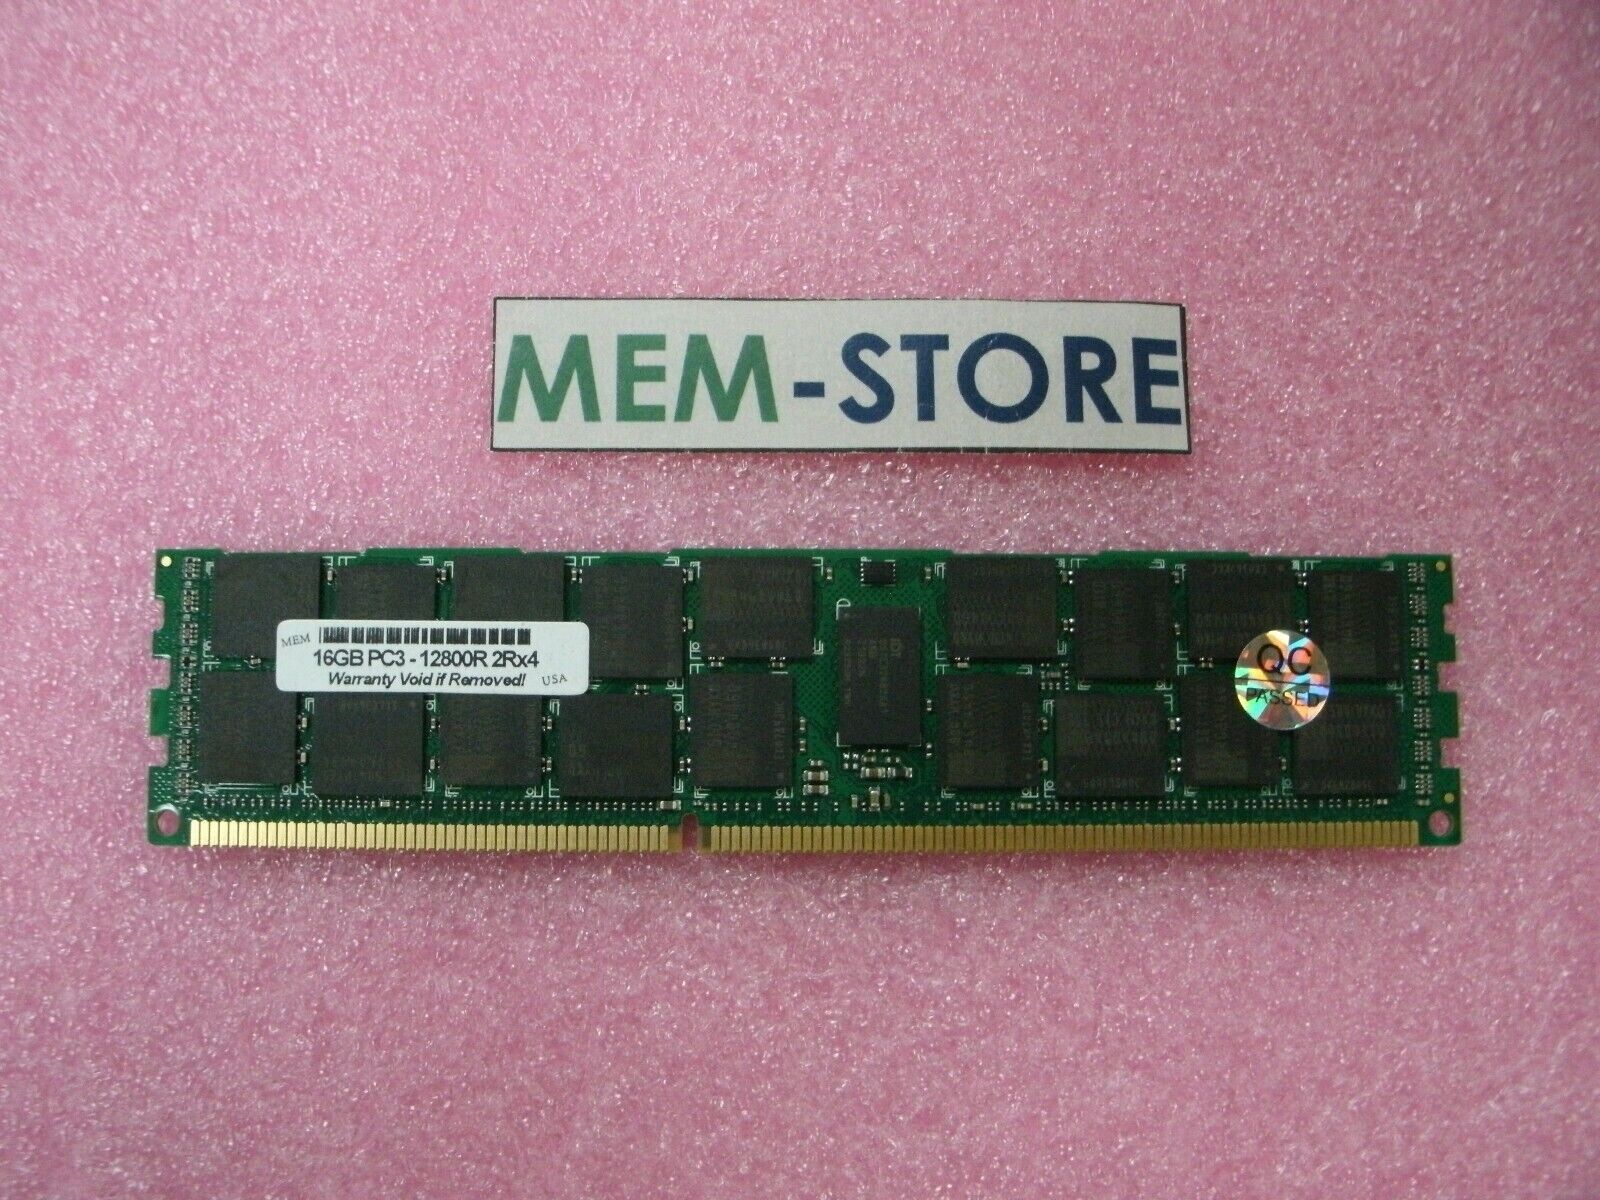 16GB DDR3-1600 ECC RDIMM Supermicro MEM-DR316L-SL04-ER16 Compatible RAM Memory (3rd Party) - image 1 of 2